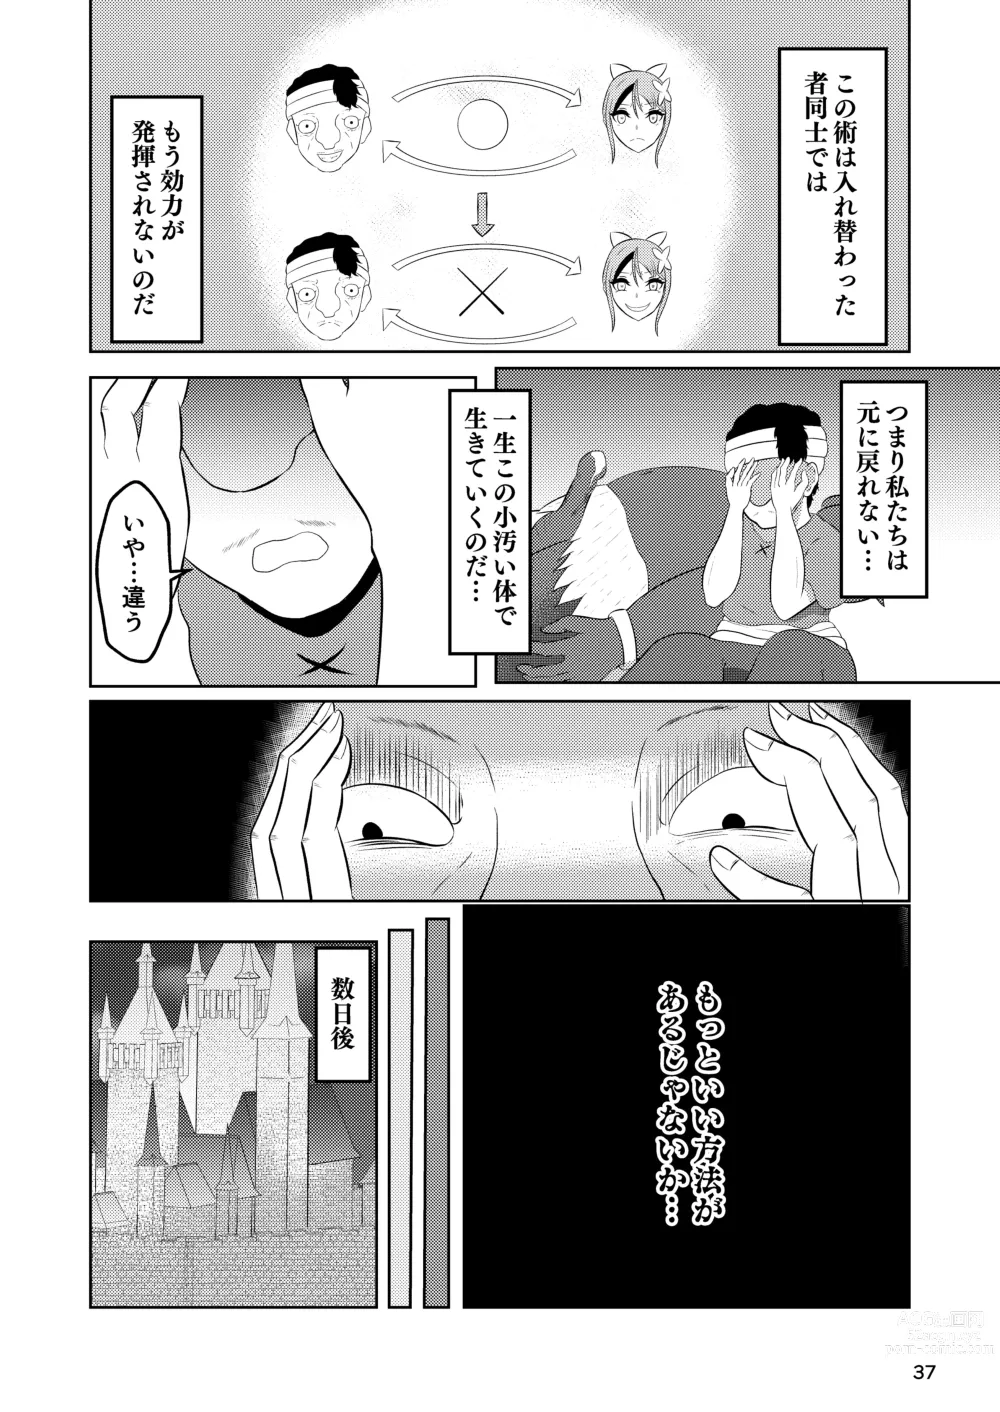 Page 36 of doujinshi Hime to Kishi  wa Nukarumi ni Kawaru